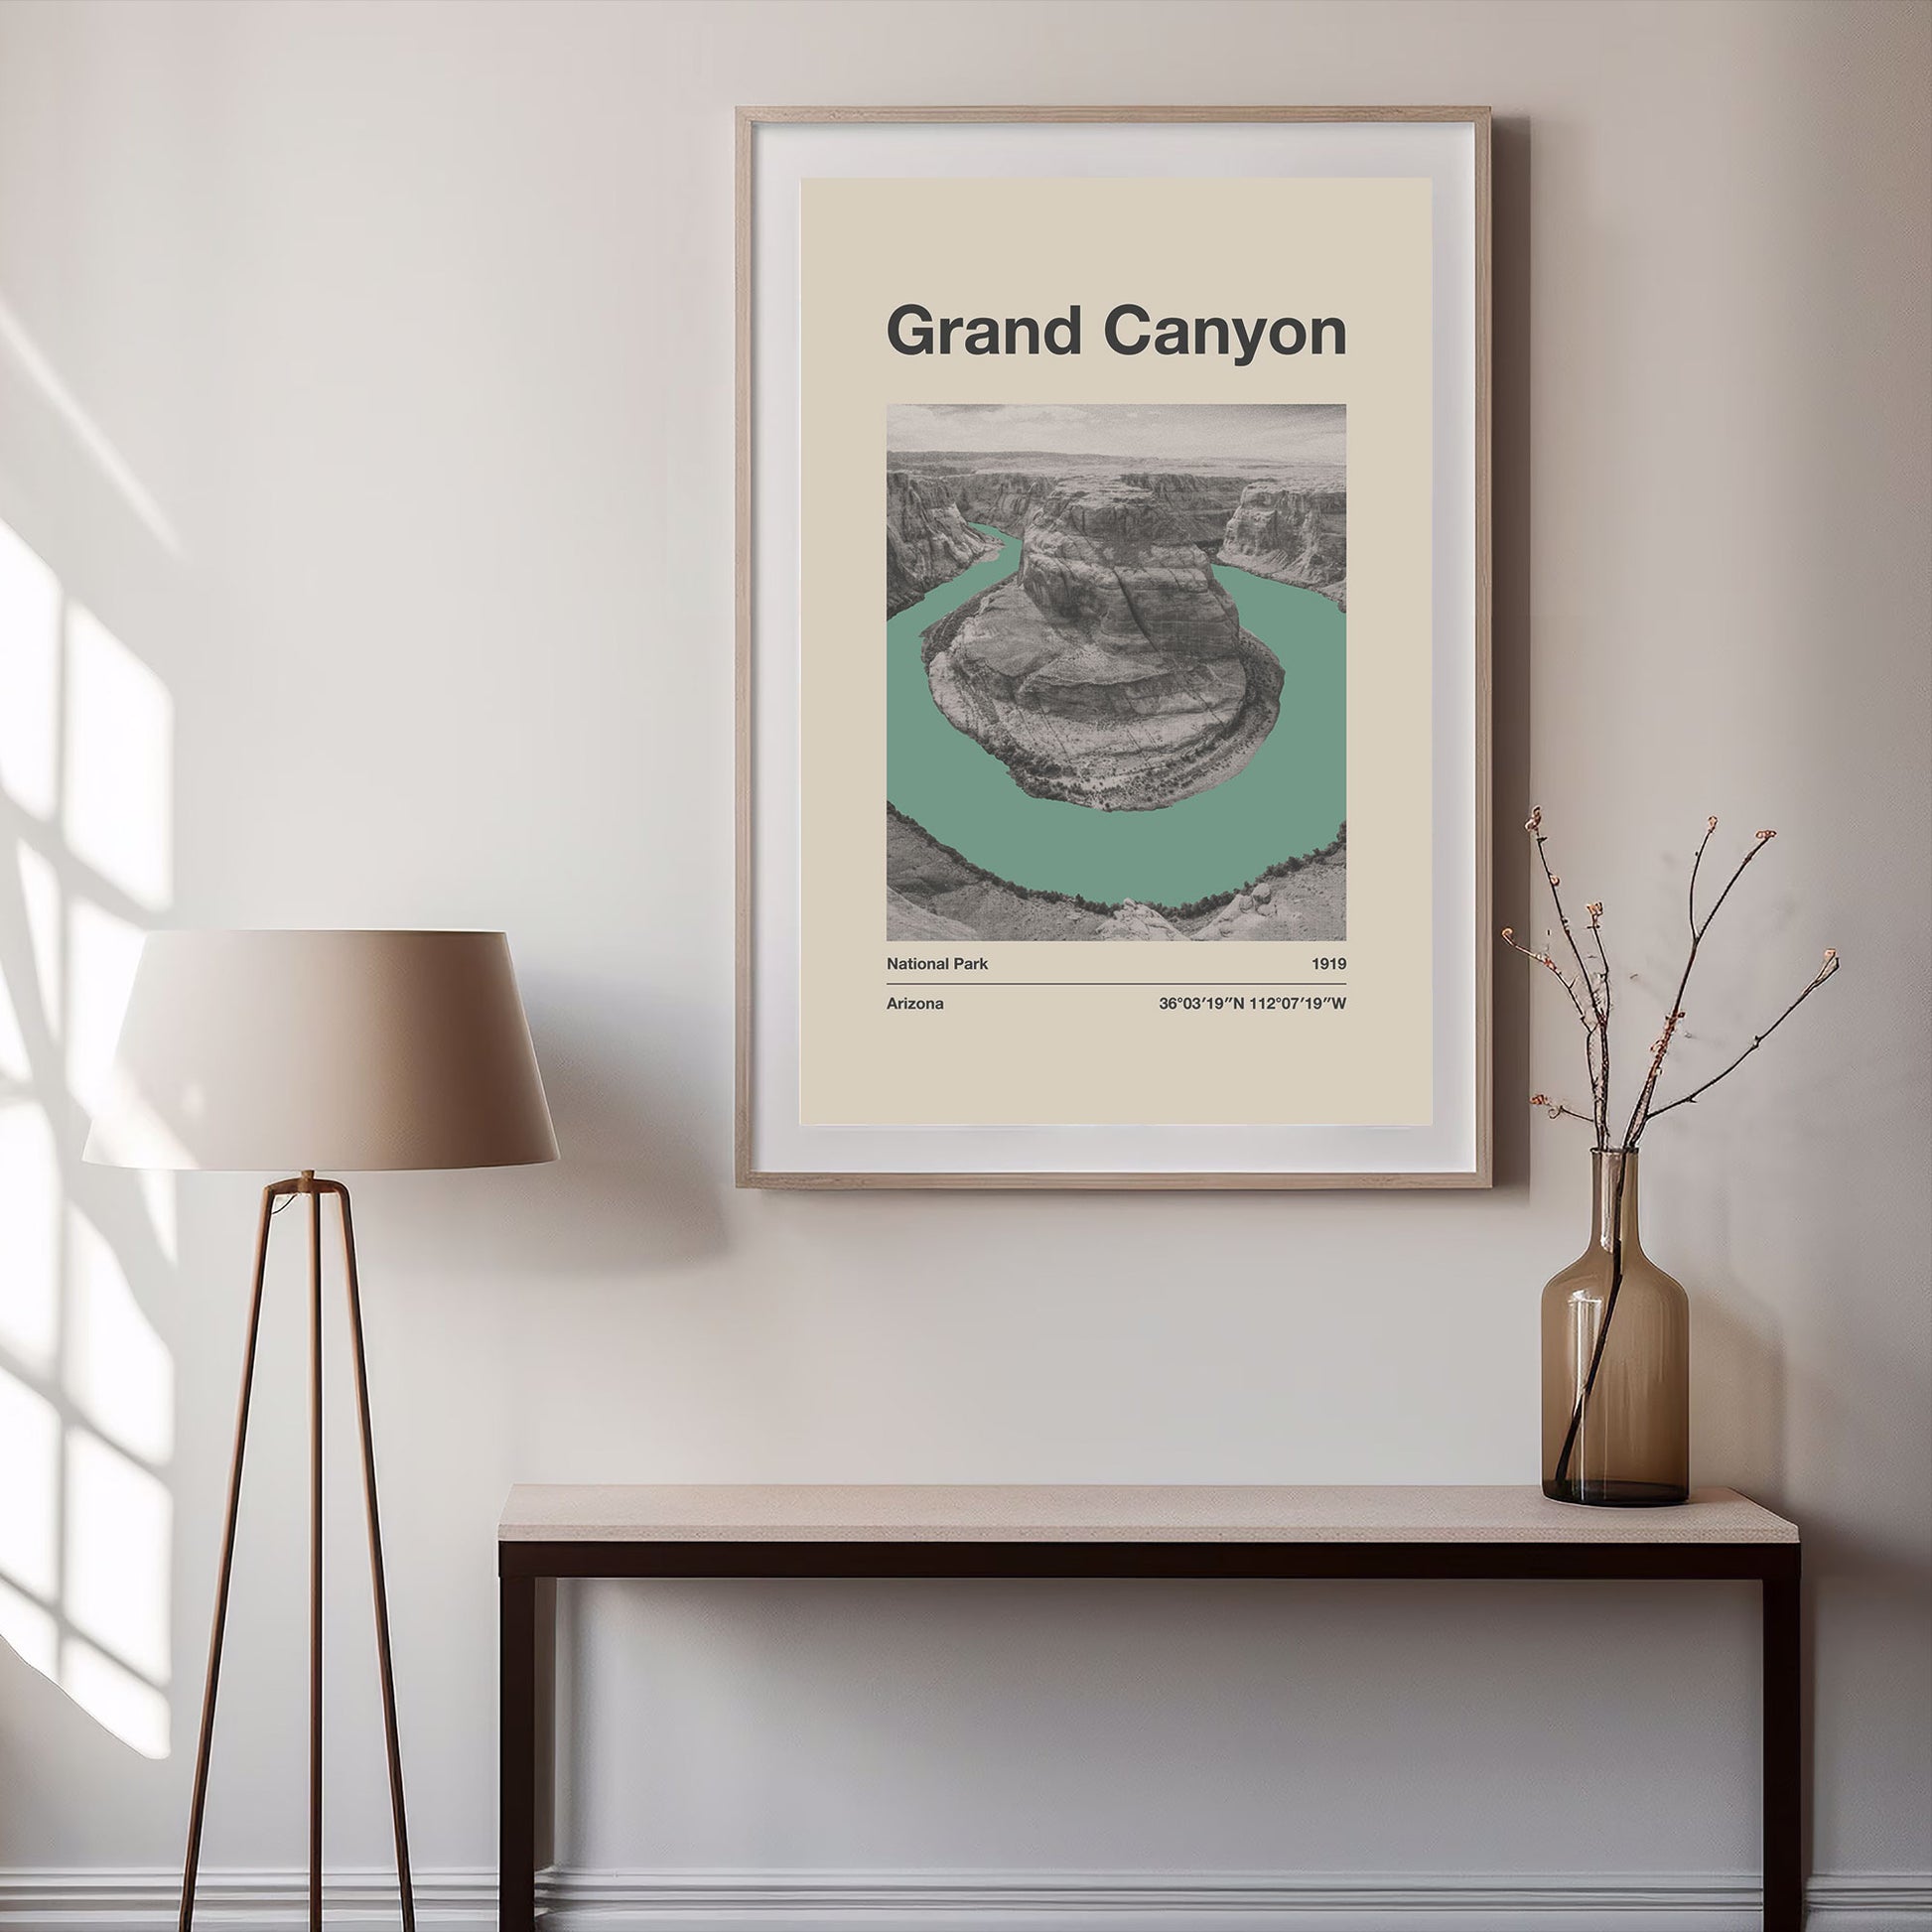 Grand Canyon National Park - Poster - national park prints